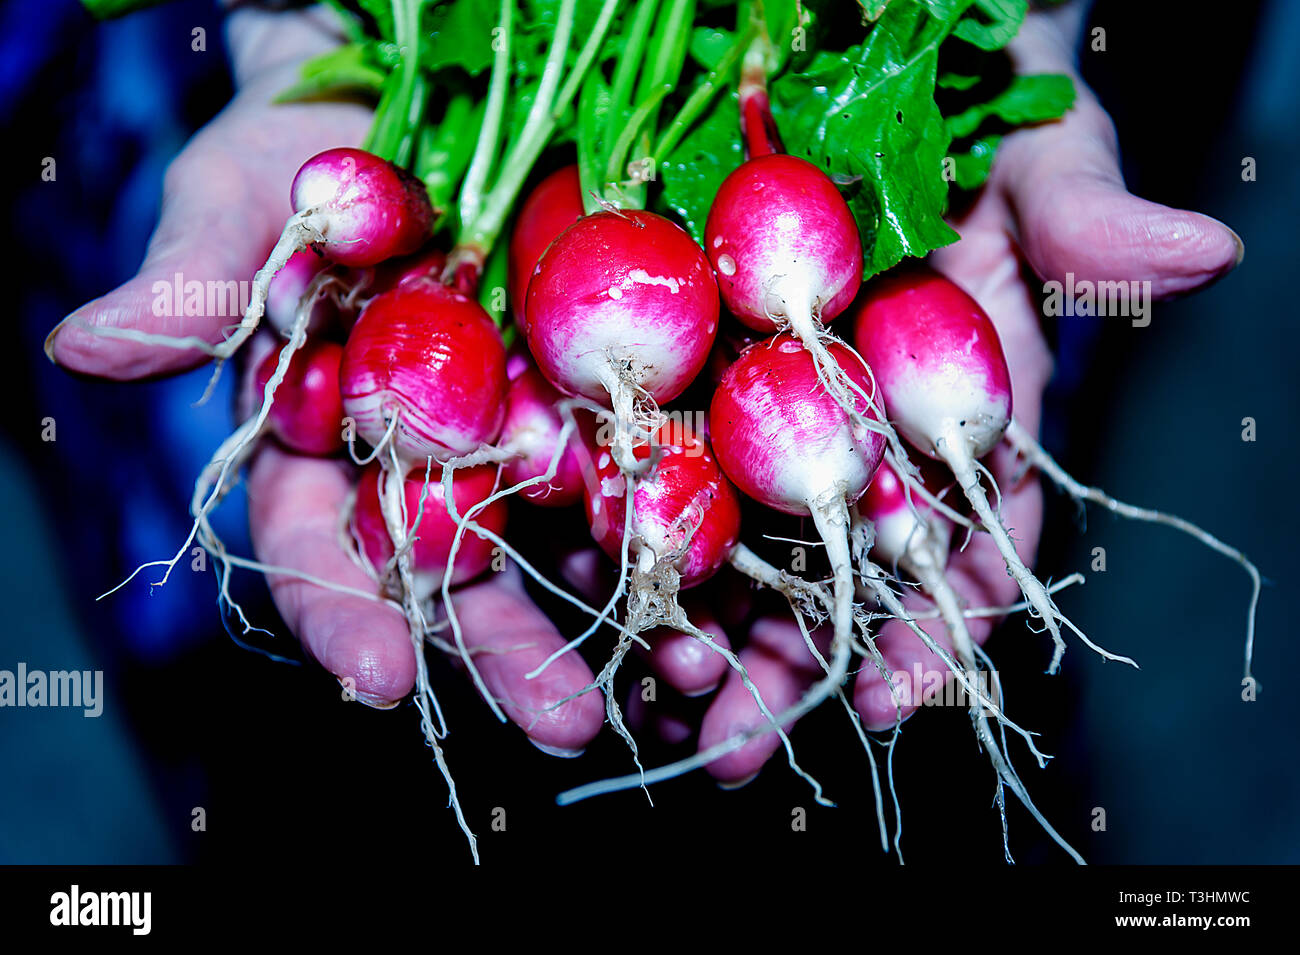 radish low glycemic index food Stock Photo